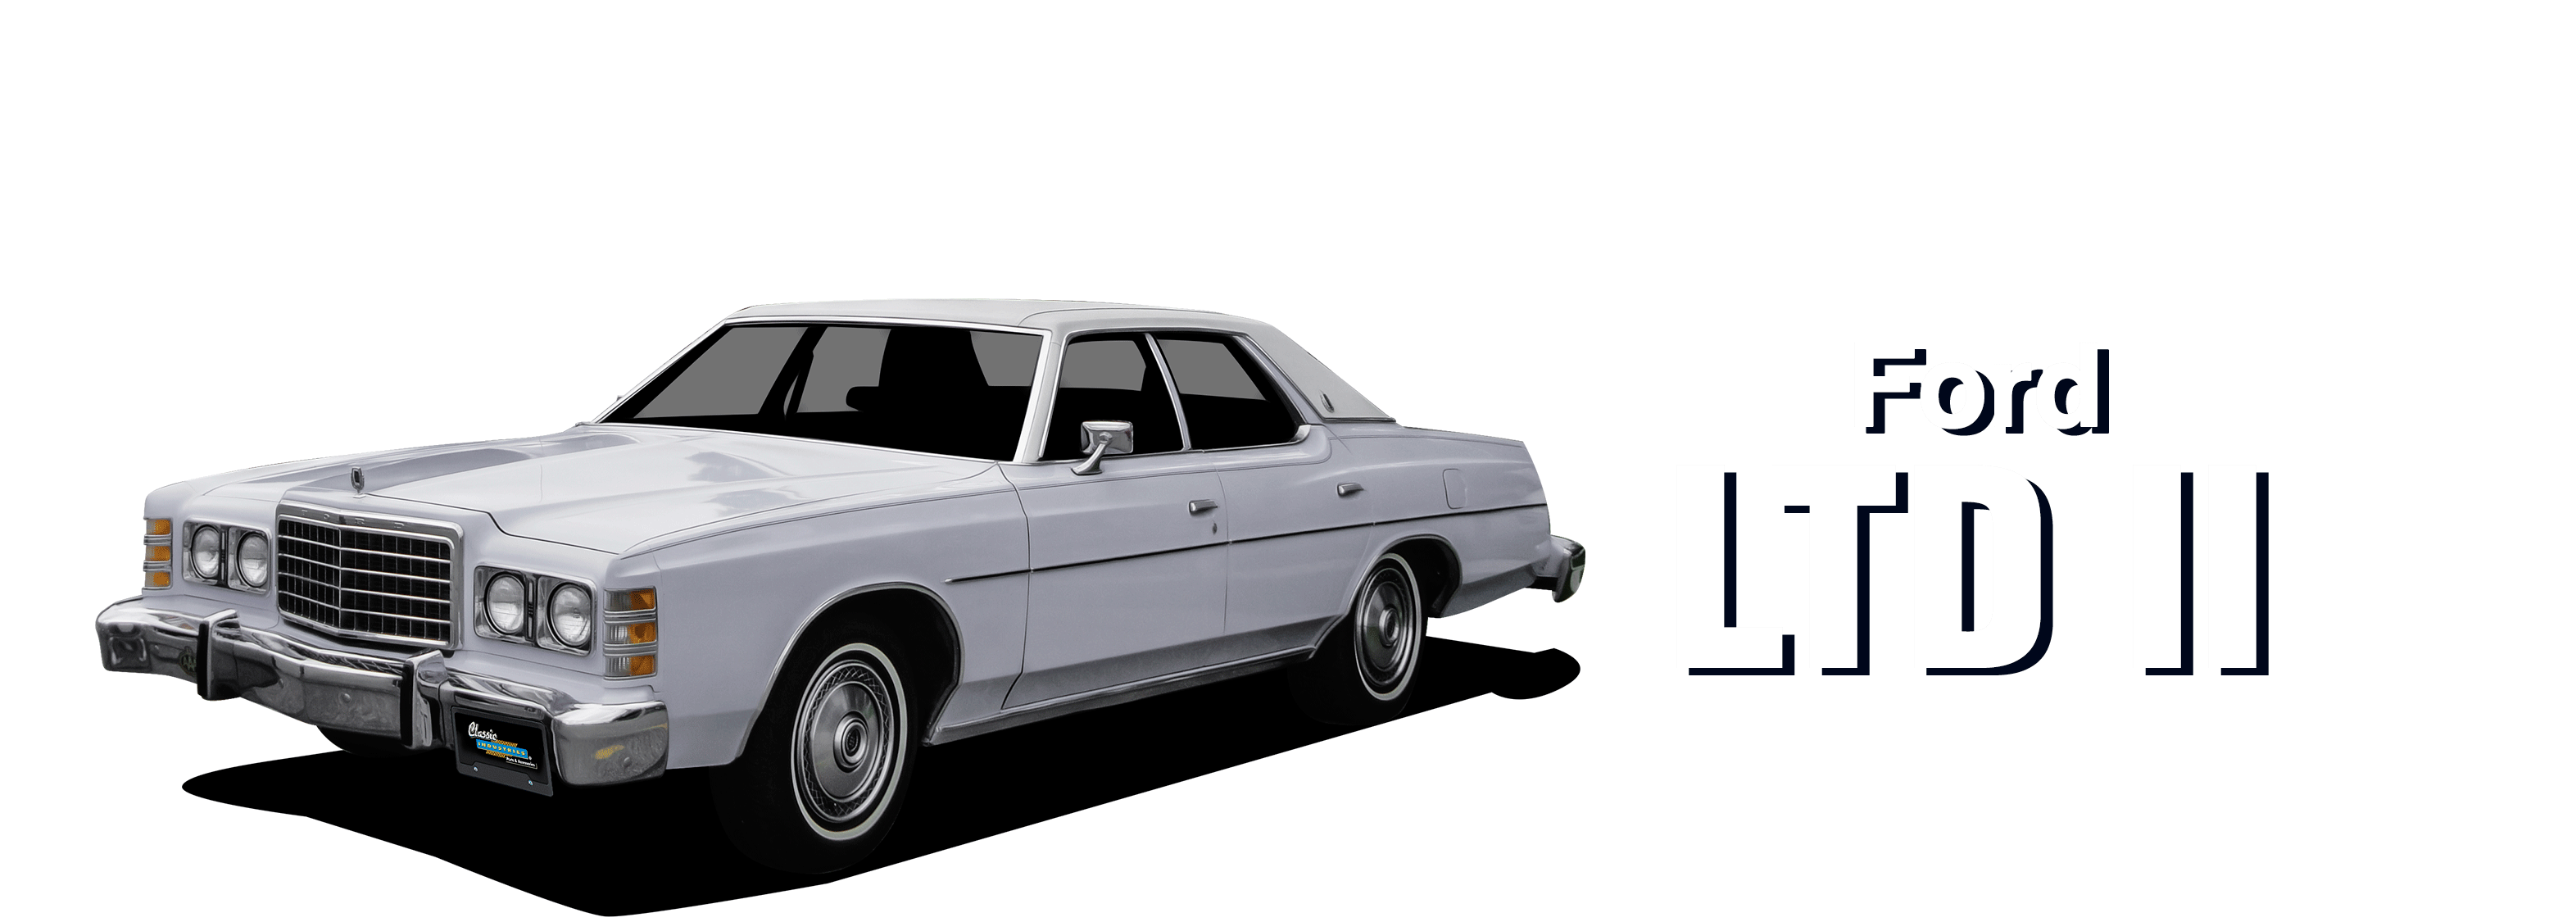 Ford-LTDII-vehicle-desktop-2023